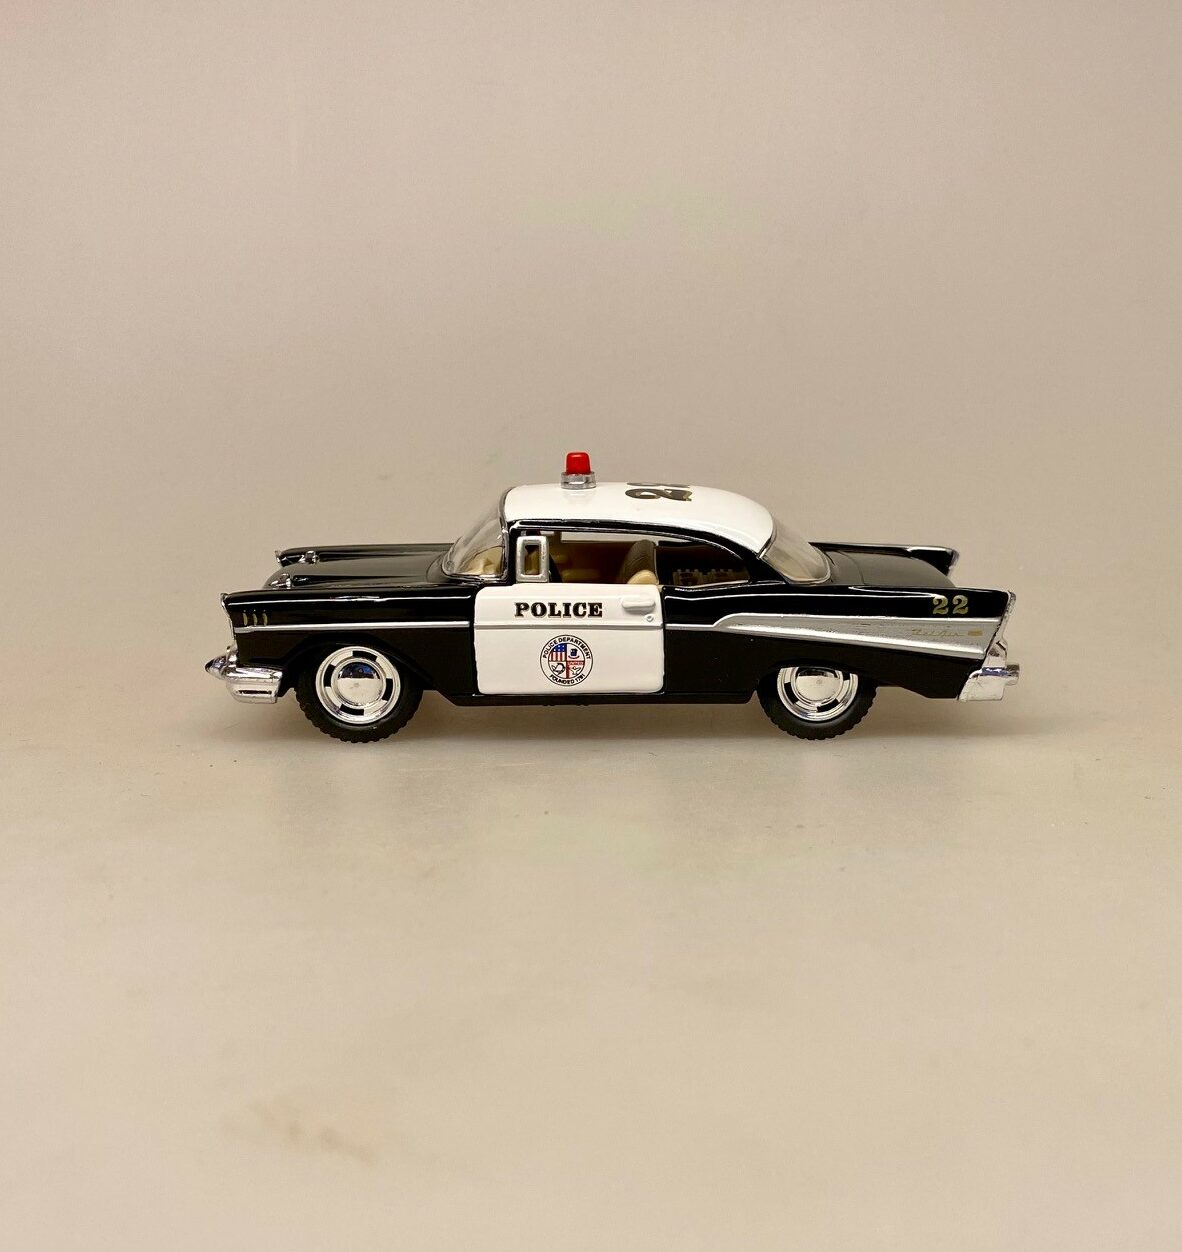 Modelbil Chevrolet Bel Air - Politi, politibil, police, amerikanerbil, udrykning, olsen banden, old timer, oldsmobile, modelbil, samler, lækker, flot, sjov, tillykke, kørekort, ny, bil, lille, ægte, 1957, biti, ribe